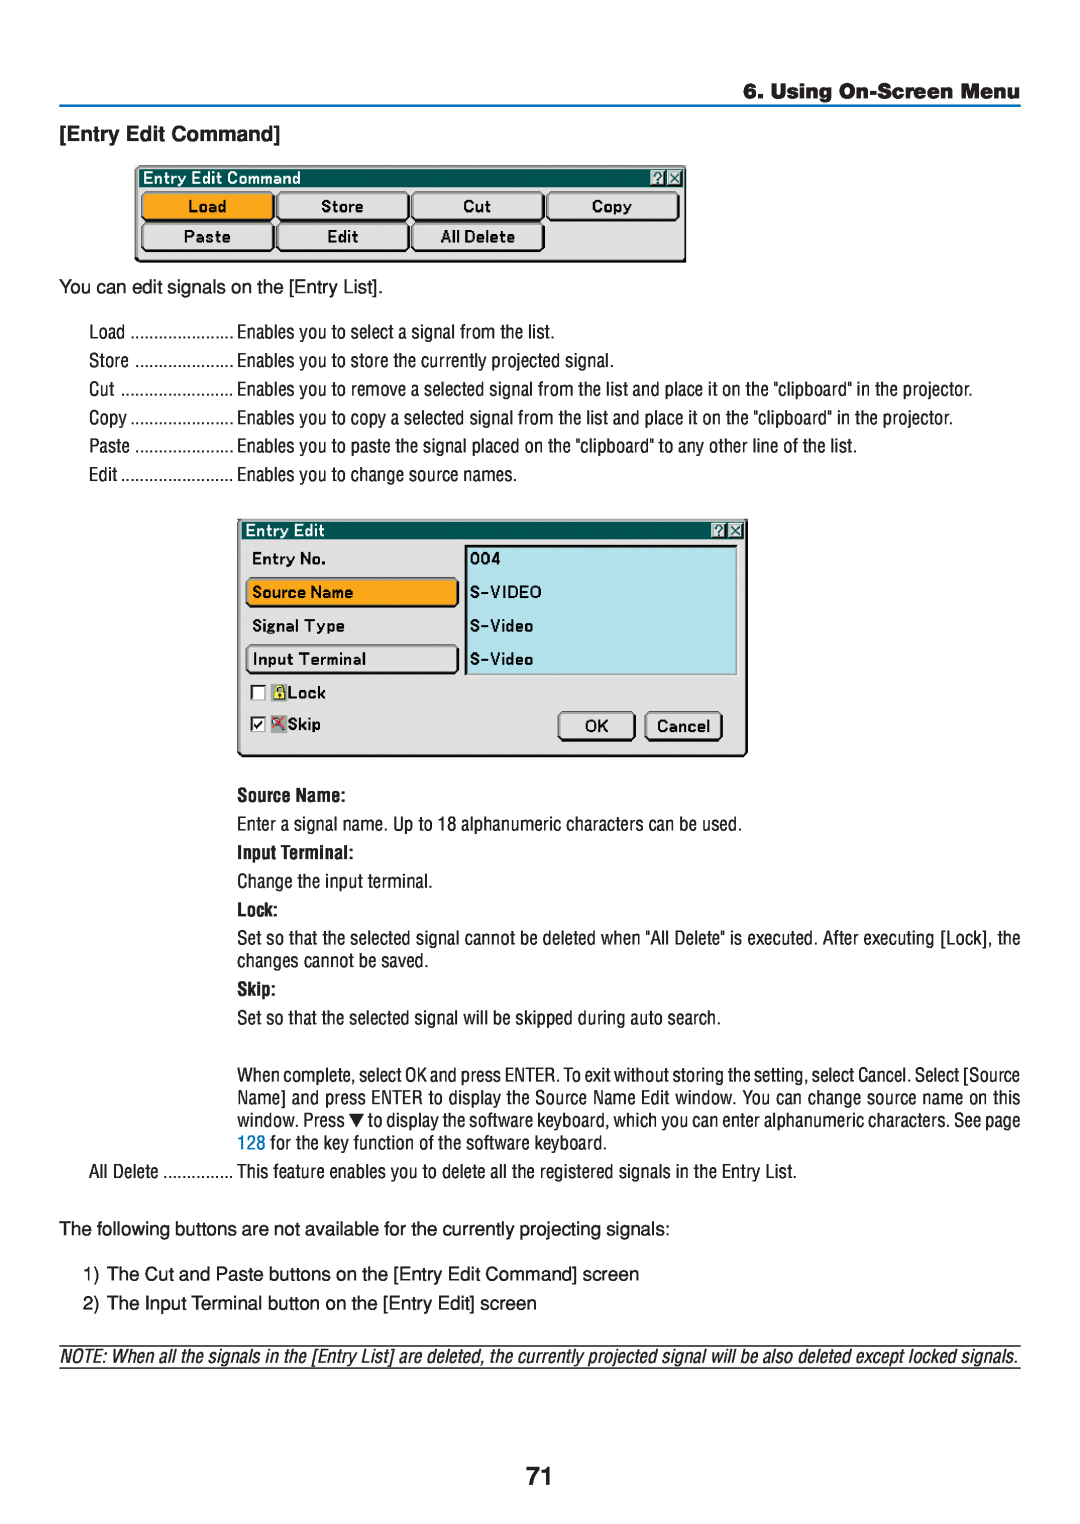 Dukane 8808 user manual Entry Edit Command, Using On-Screen Menu, Source Name, Input Terminal, Lock, Skip 